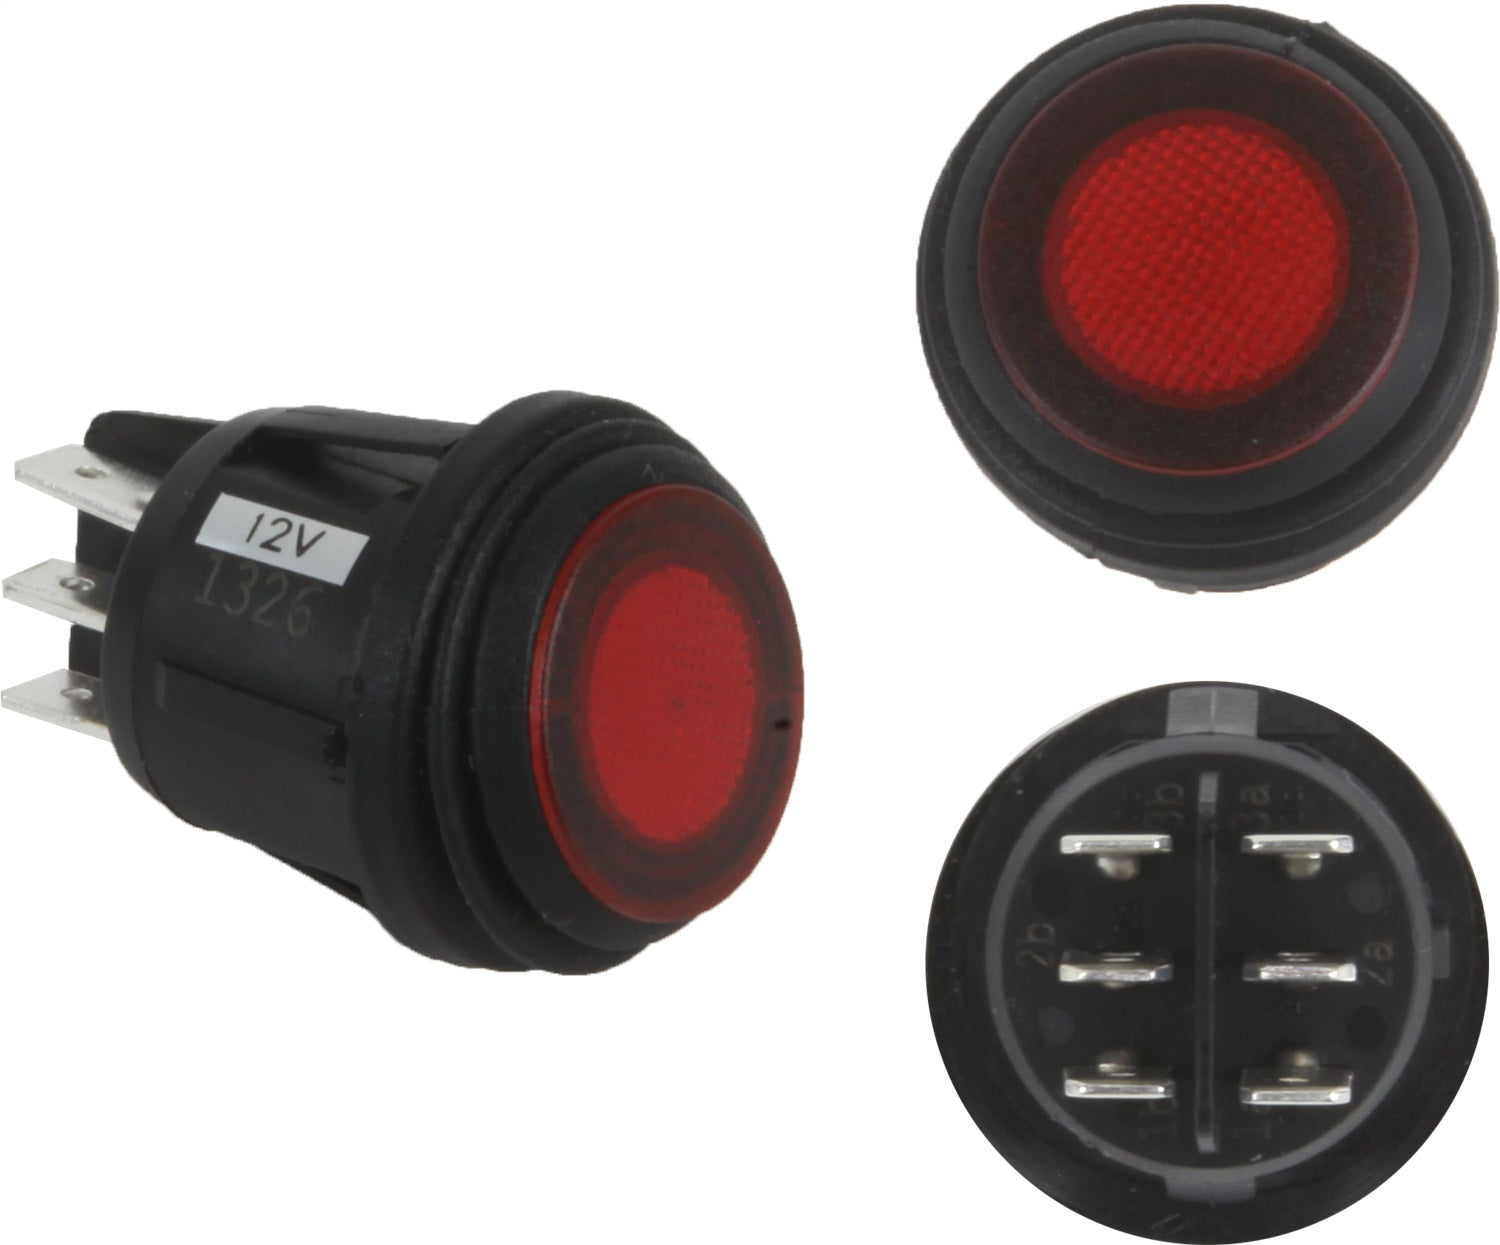 3 Position Rocker Switch (On/Off/Backlight), Red, Single